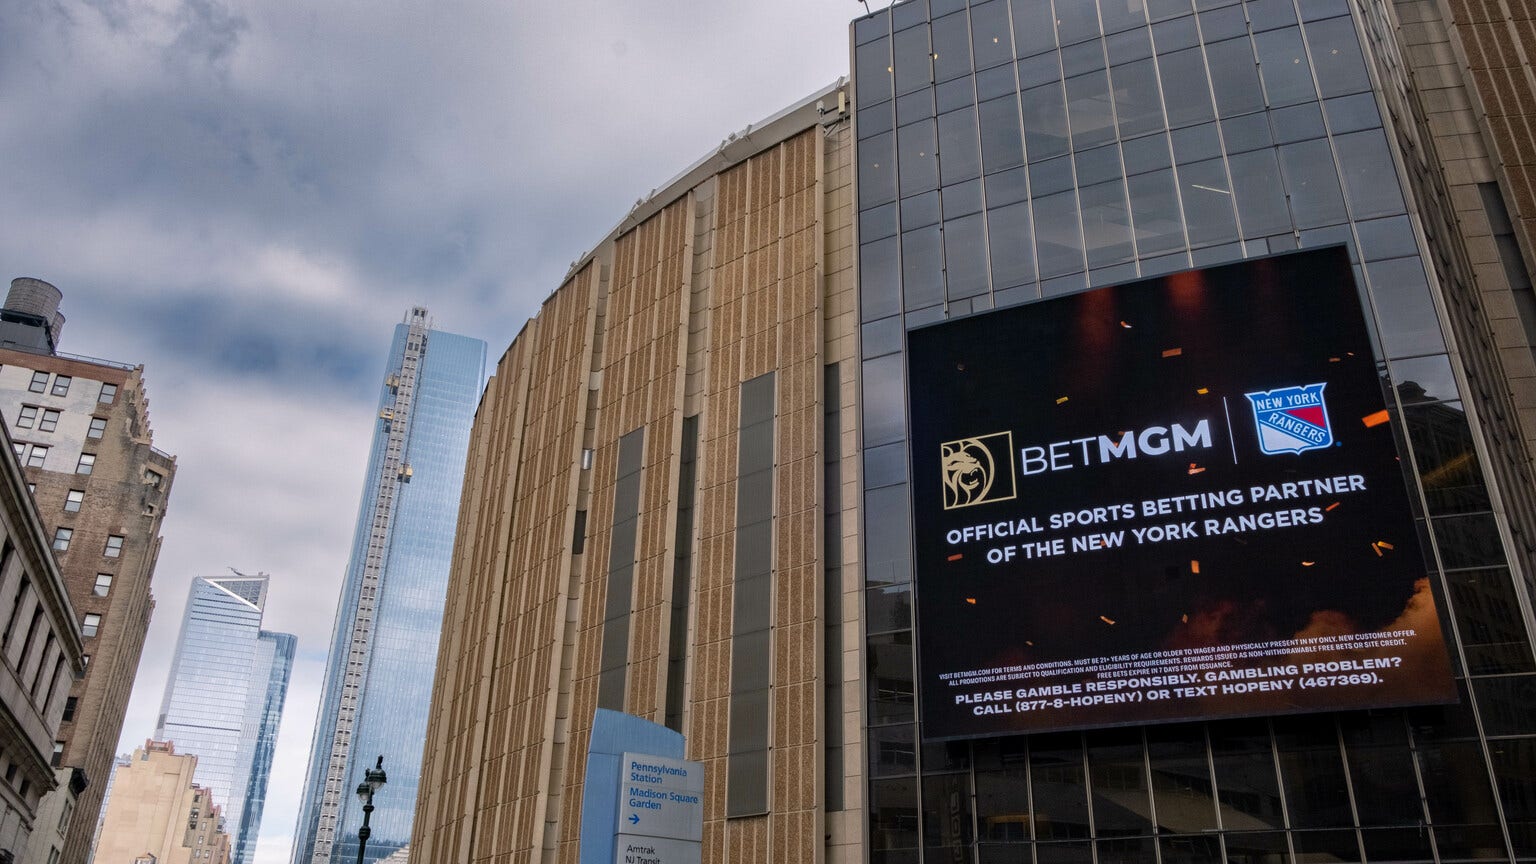 Madison Square Garden Entertainment: Upside Potential, But Risks